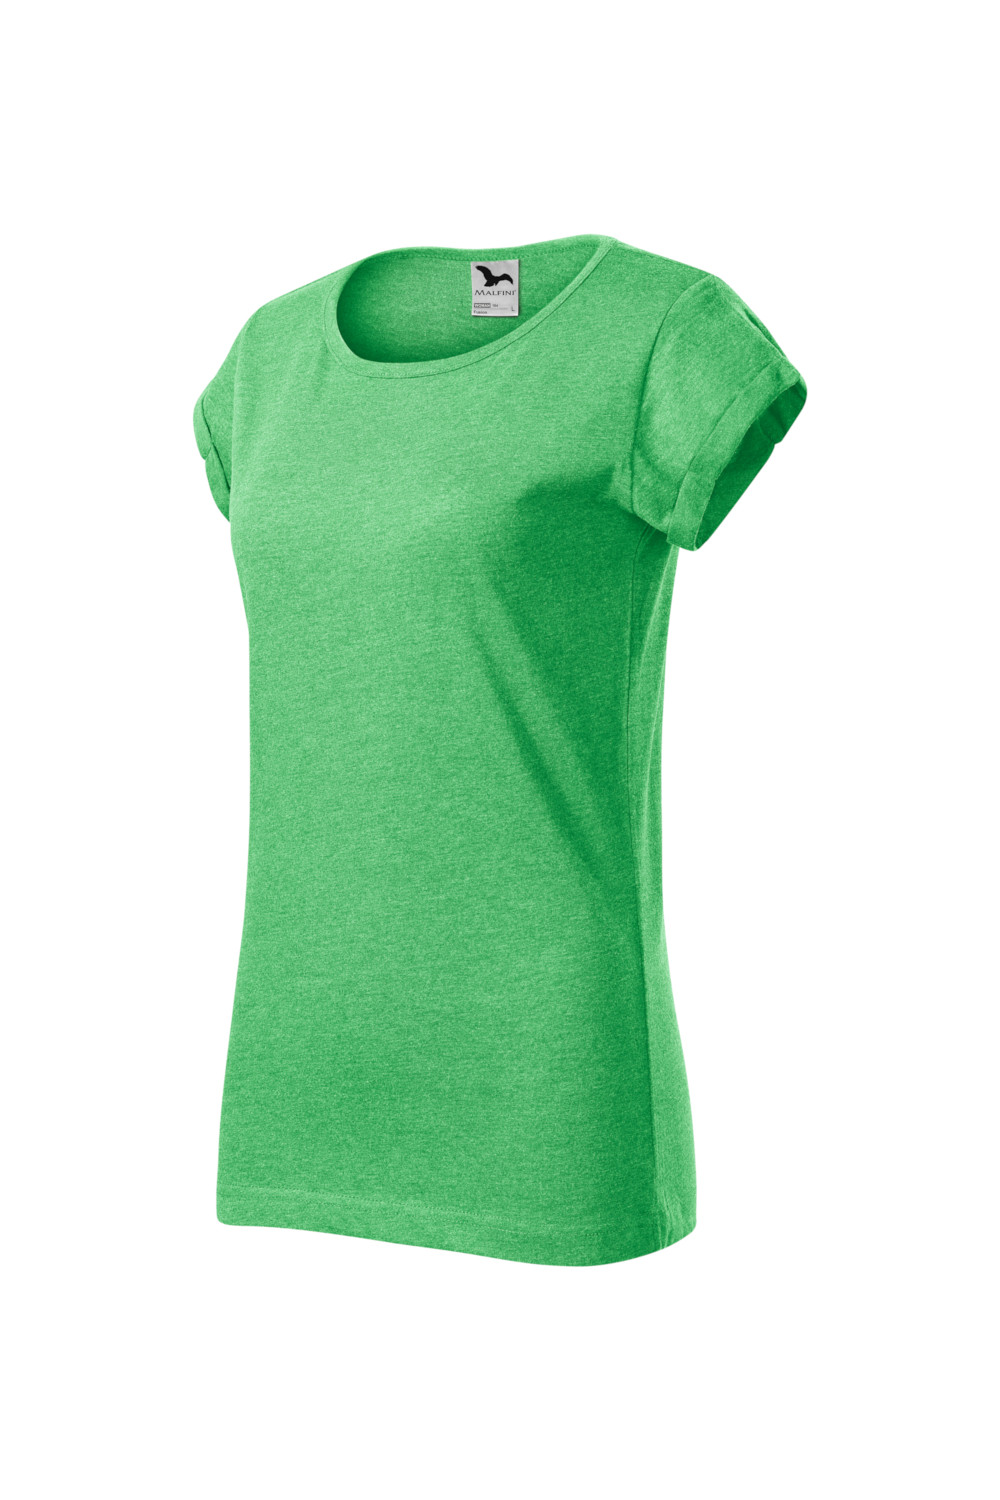 Koszulka damska melanżowa FUSION 164 koszulki / T-shirt zielony melanż M6